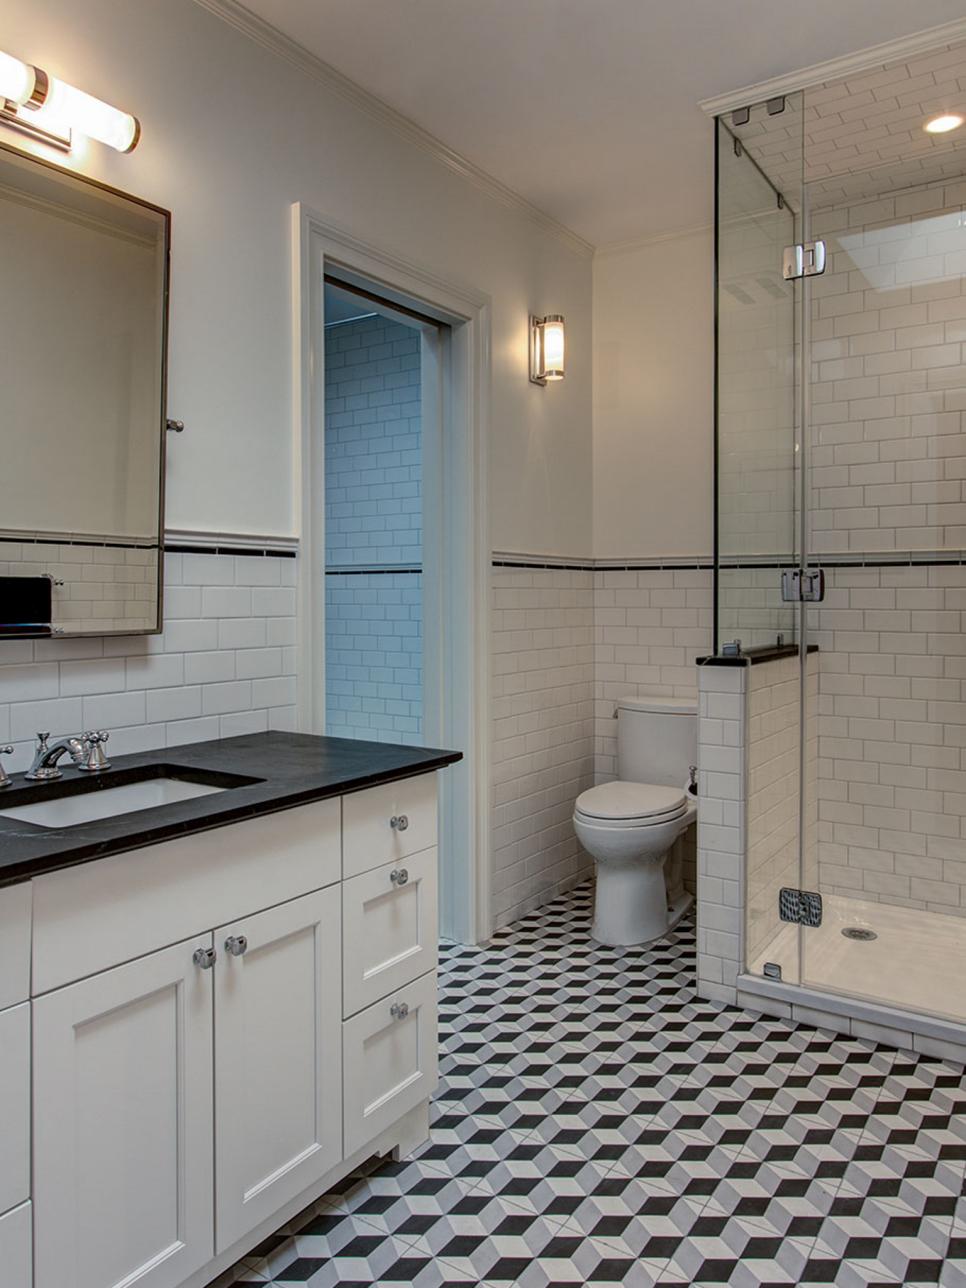 Transitional Bathroom With Geometric Tile Floor | HGTV